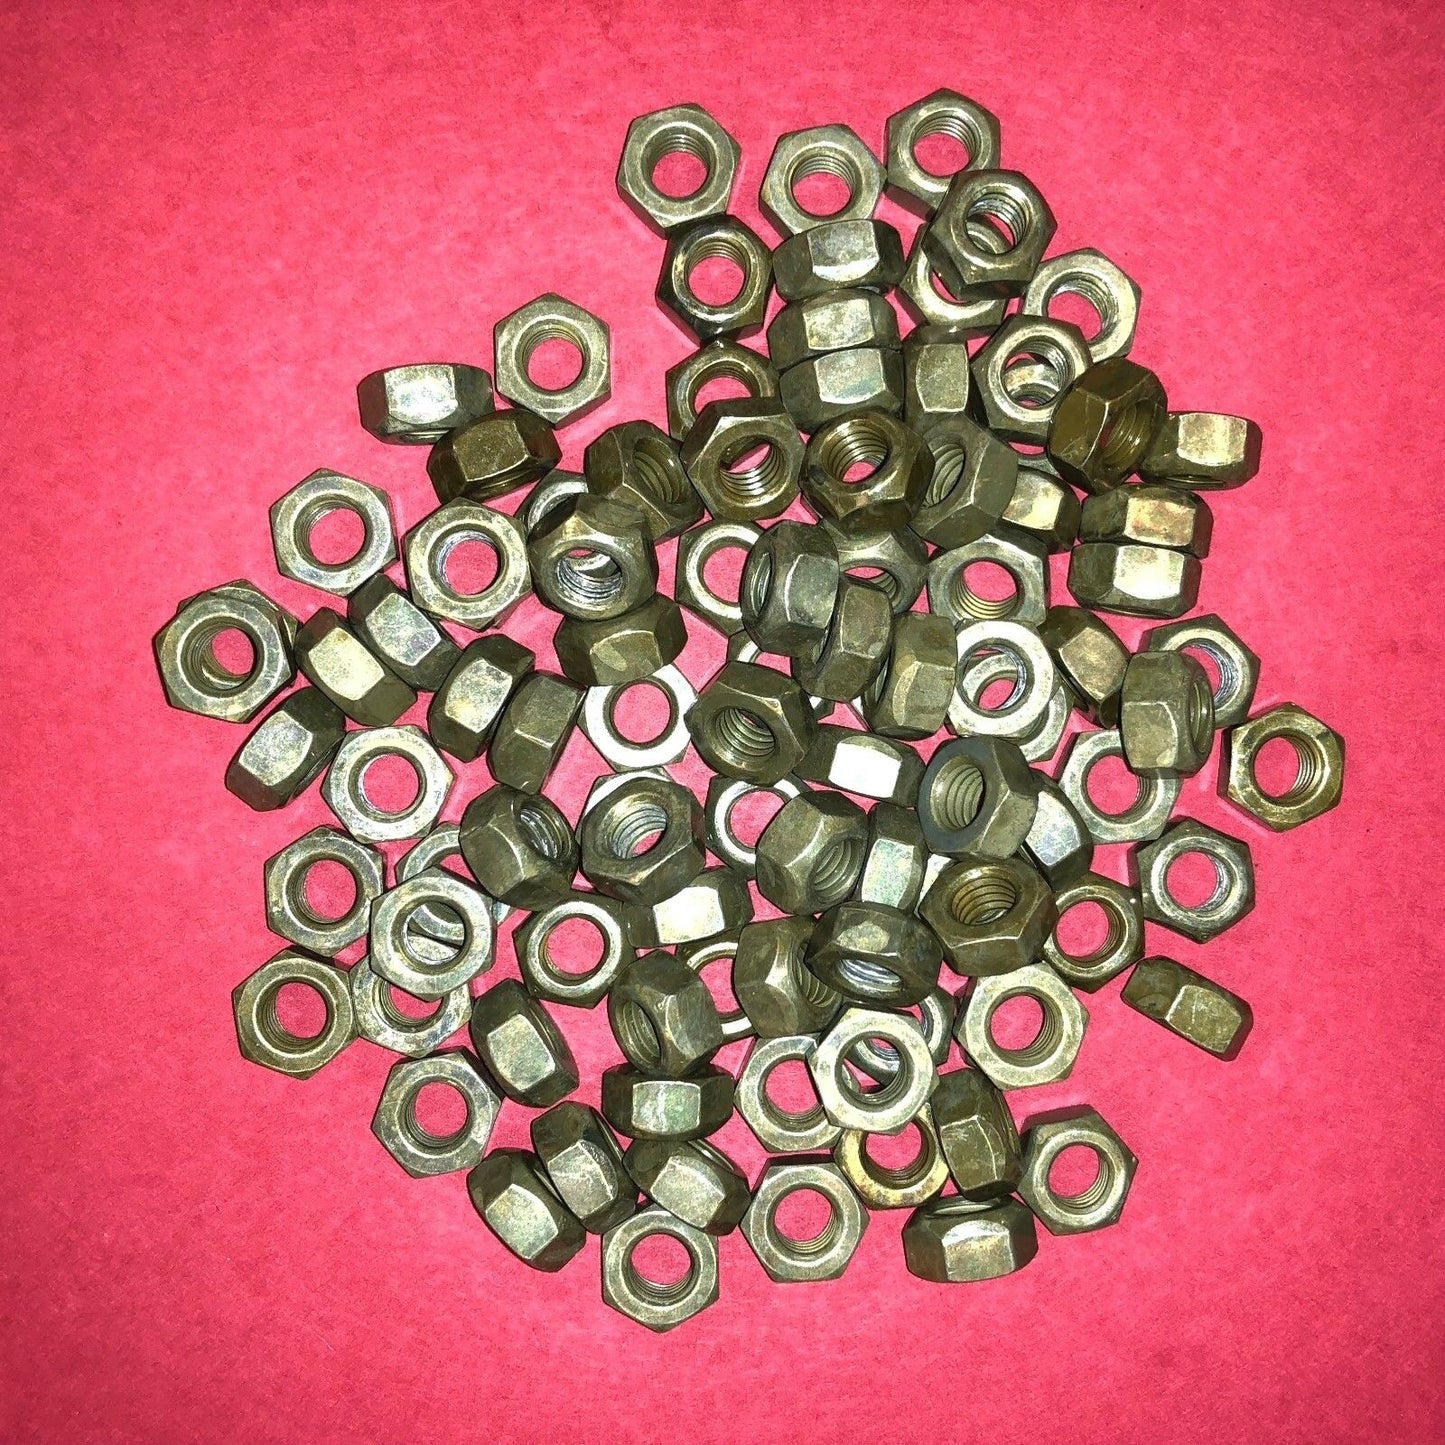 *1000 each* Nuts - M8 x 1.25mm Organic Zinc Plated Prevailing Torque Self-Locking